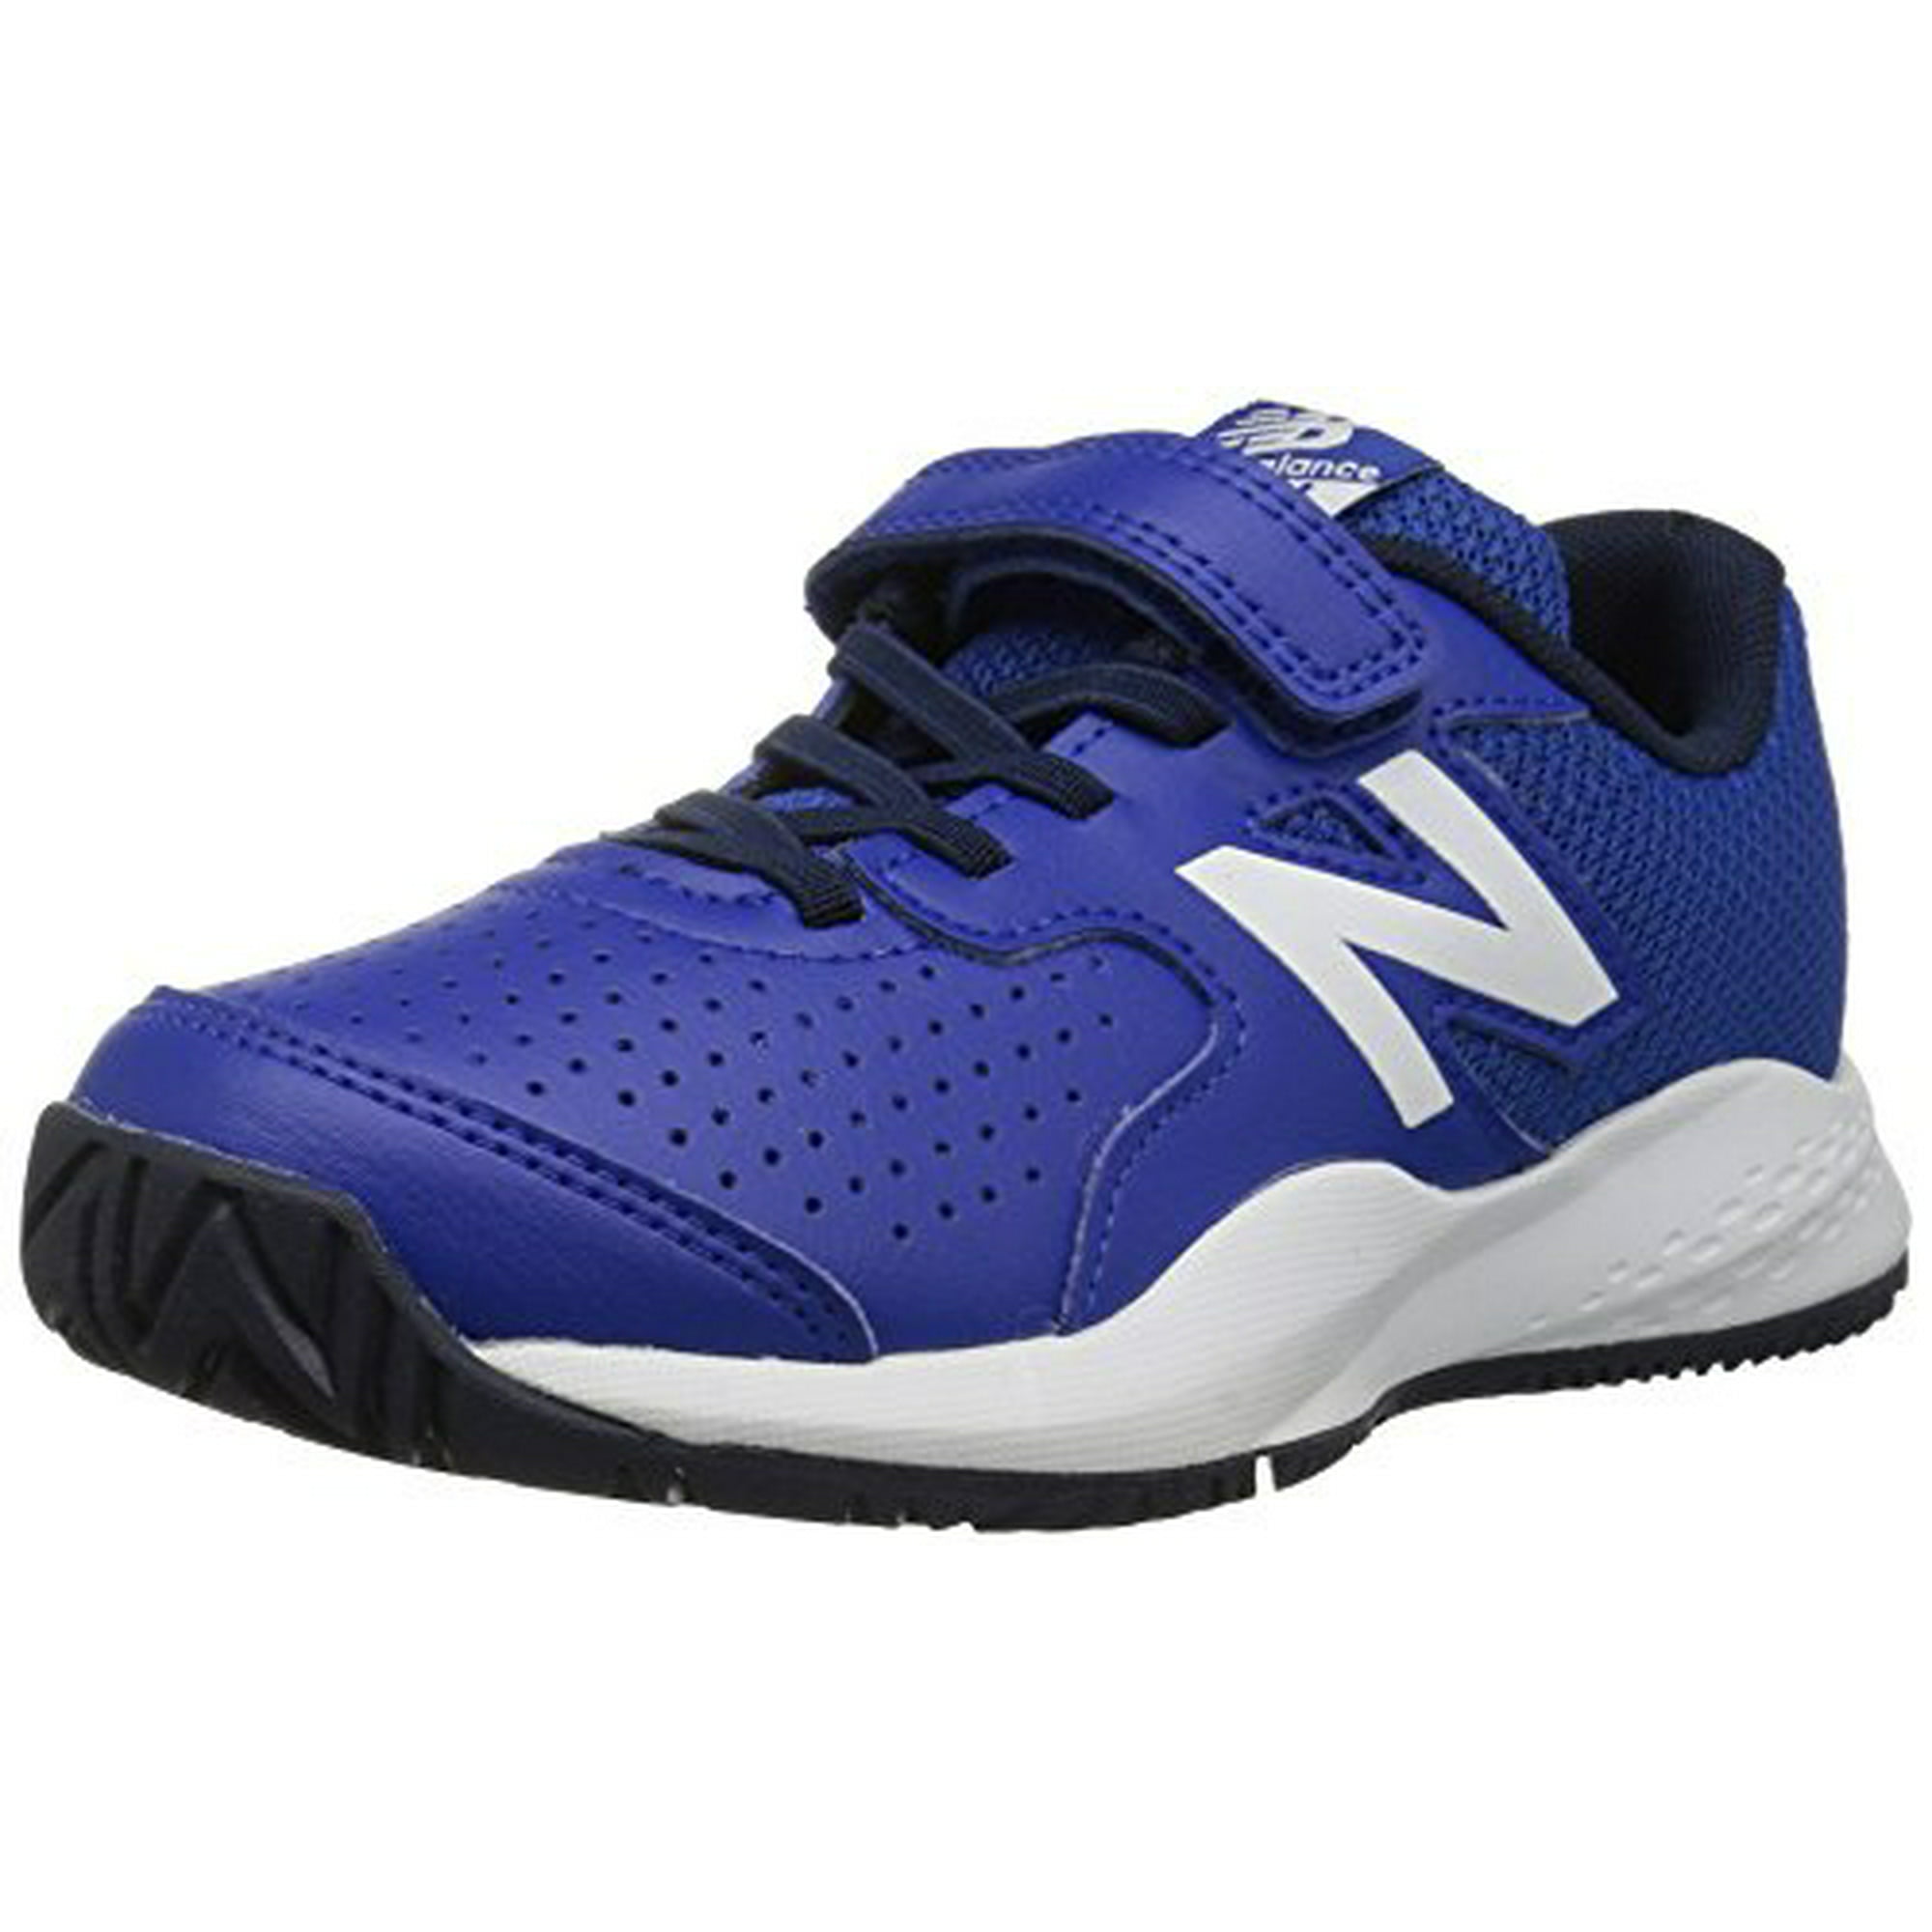 New Balance Boys' 696v3 Tennis Shoe, Blue/White, 10.5 M US Little ...